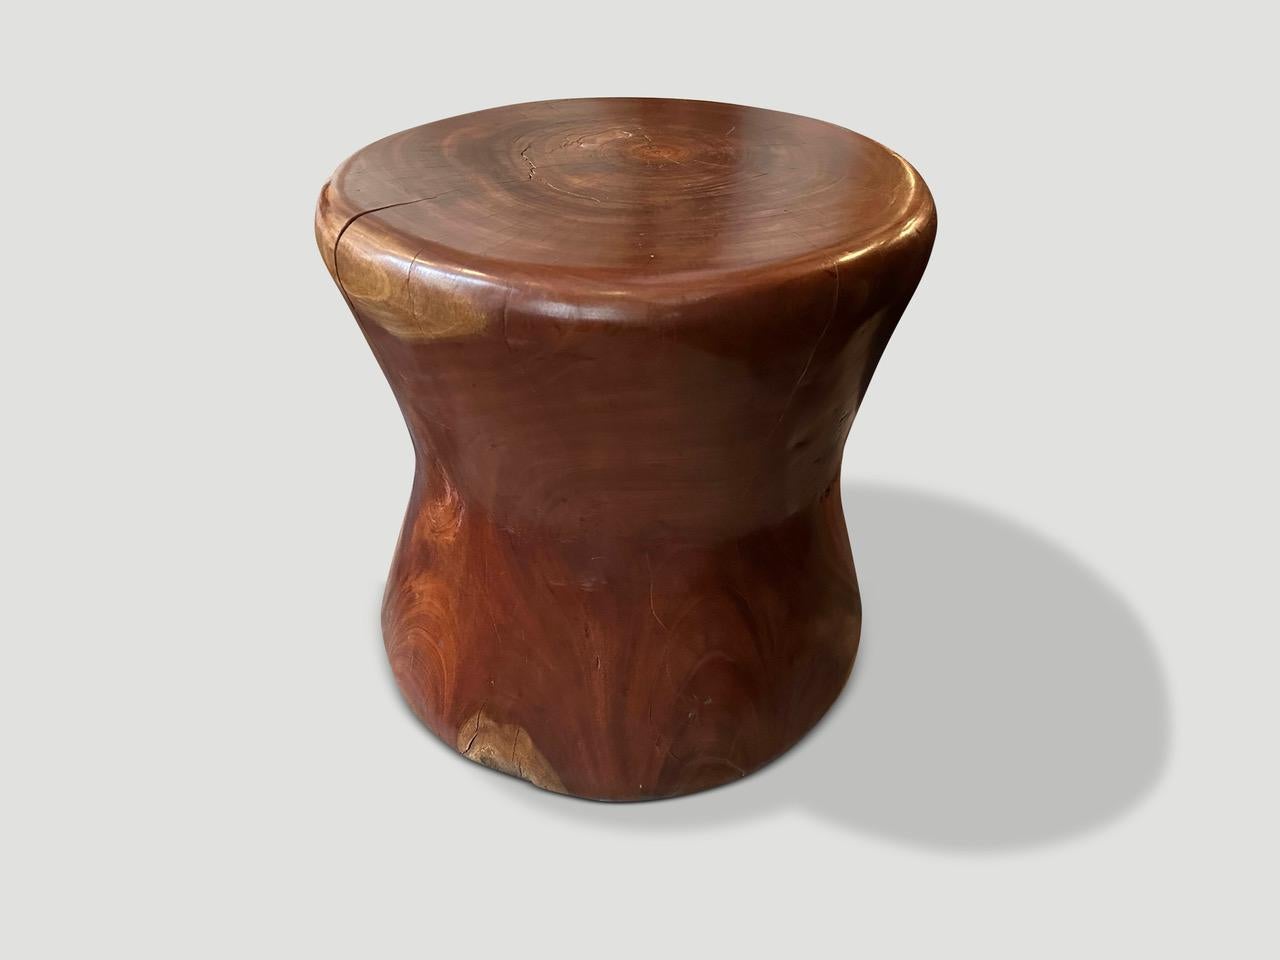 Organic Modern Andrianna Shamaris Century Old Mahogany Wood Side Table or Stool For Sale